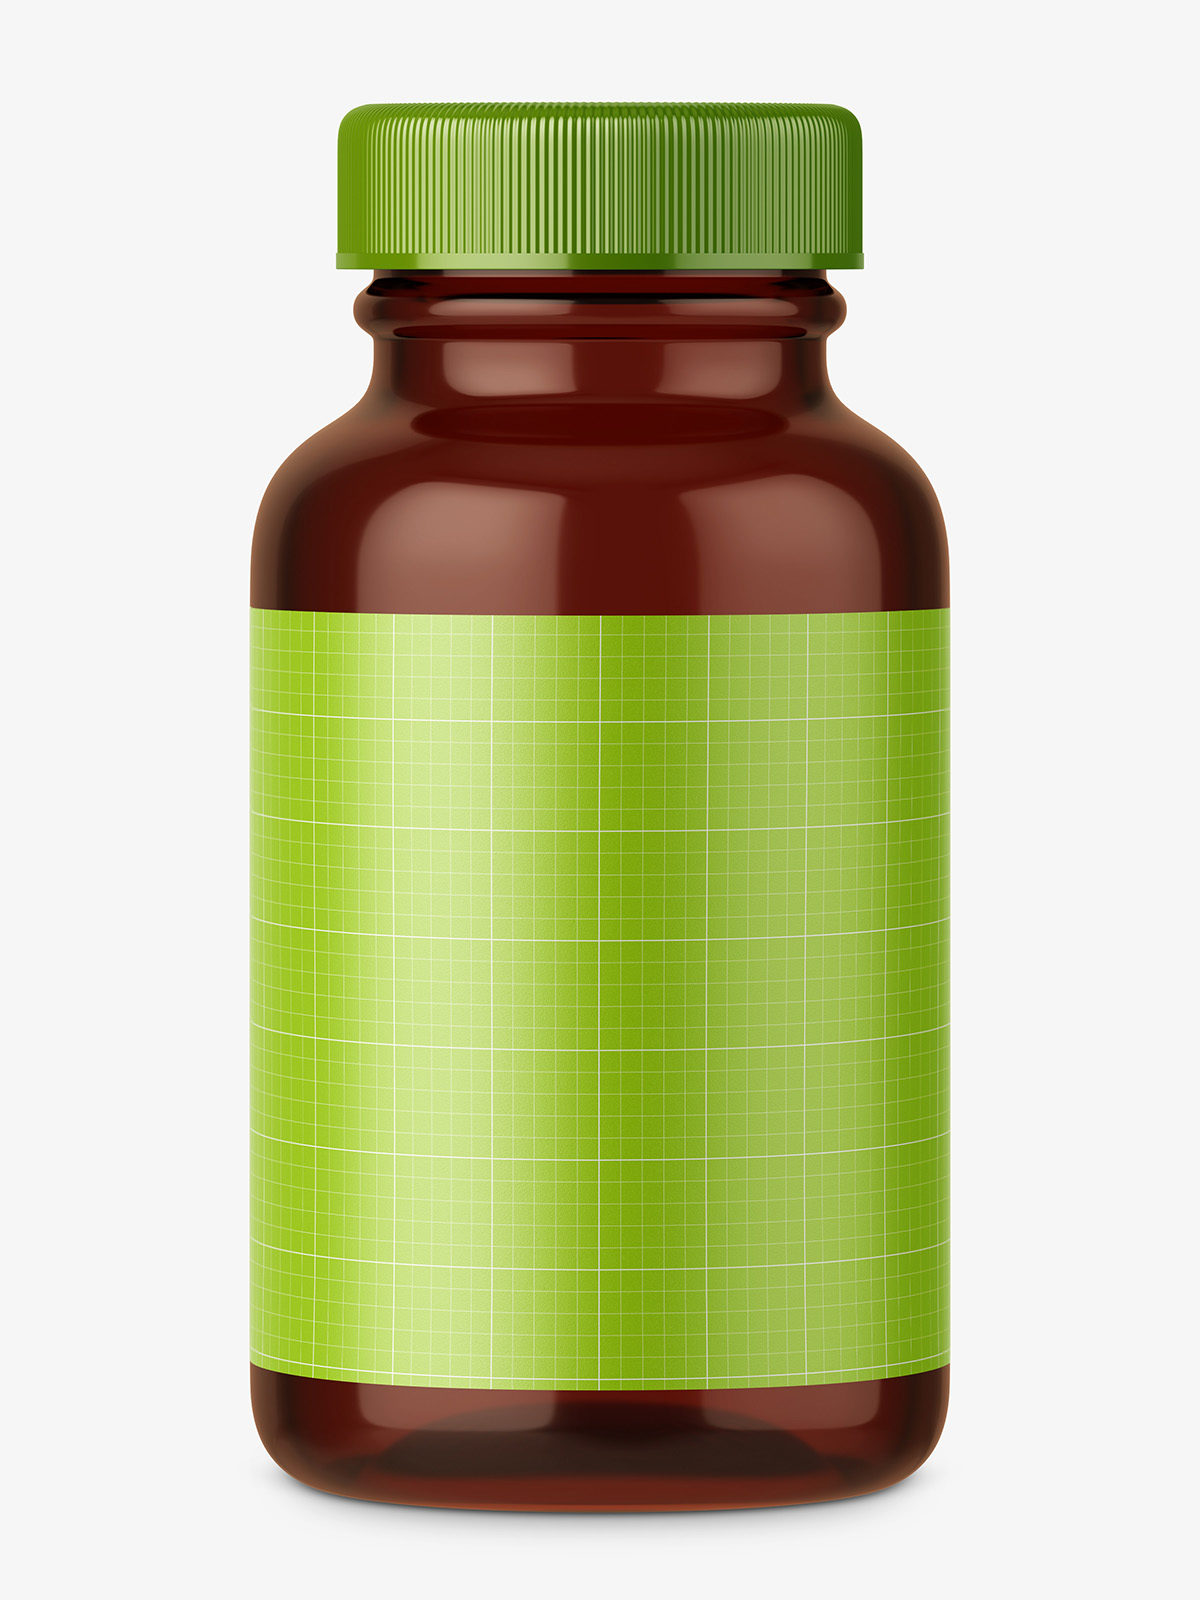 Download Amber pill jar - Smarty Mockups